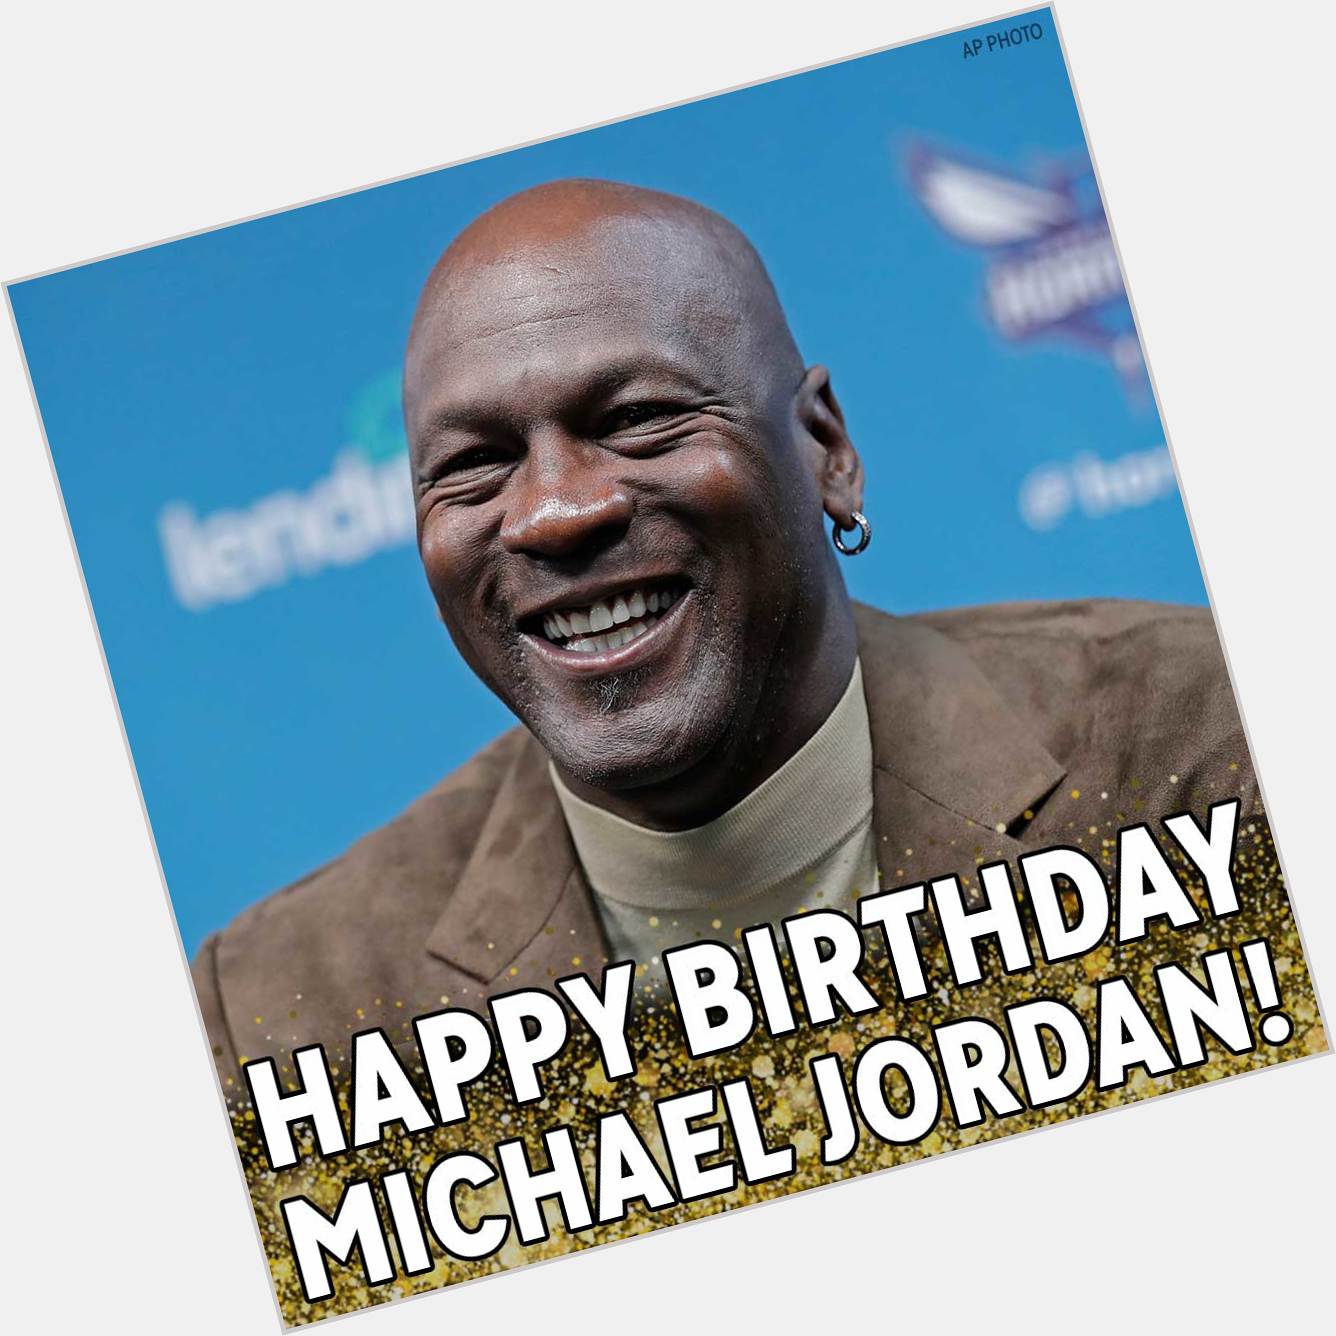 HAPPY BIRTHDAY to Michael Jordan: His Airness! 